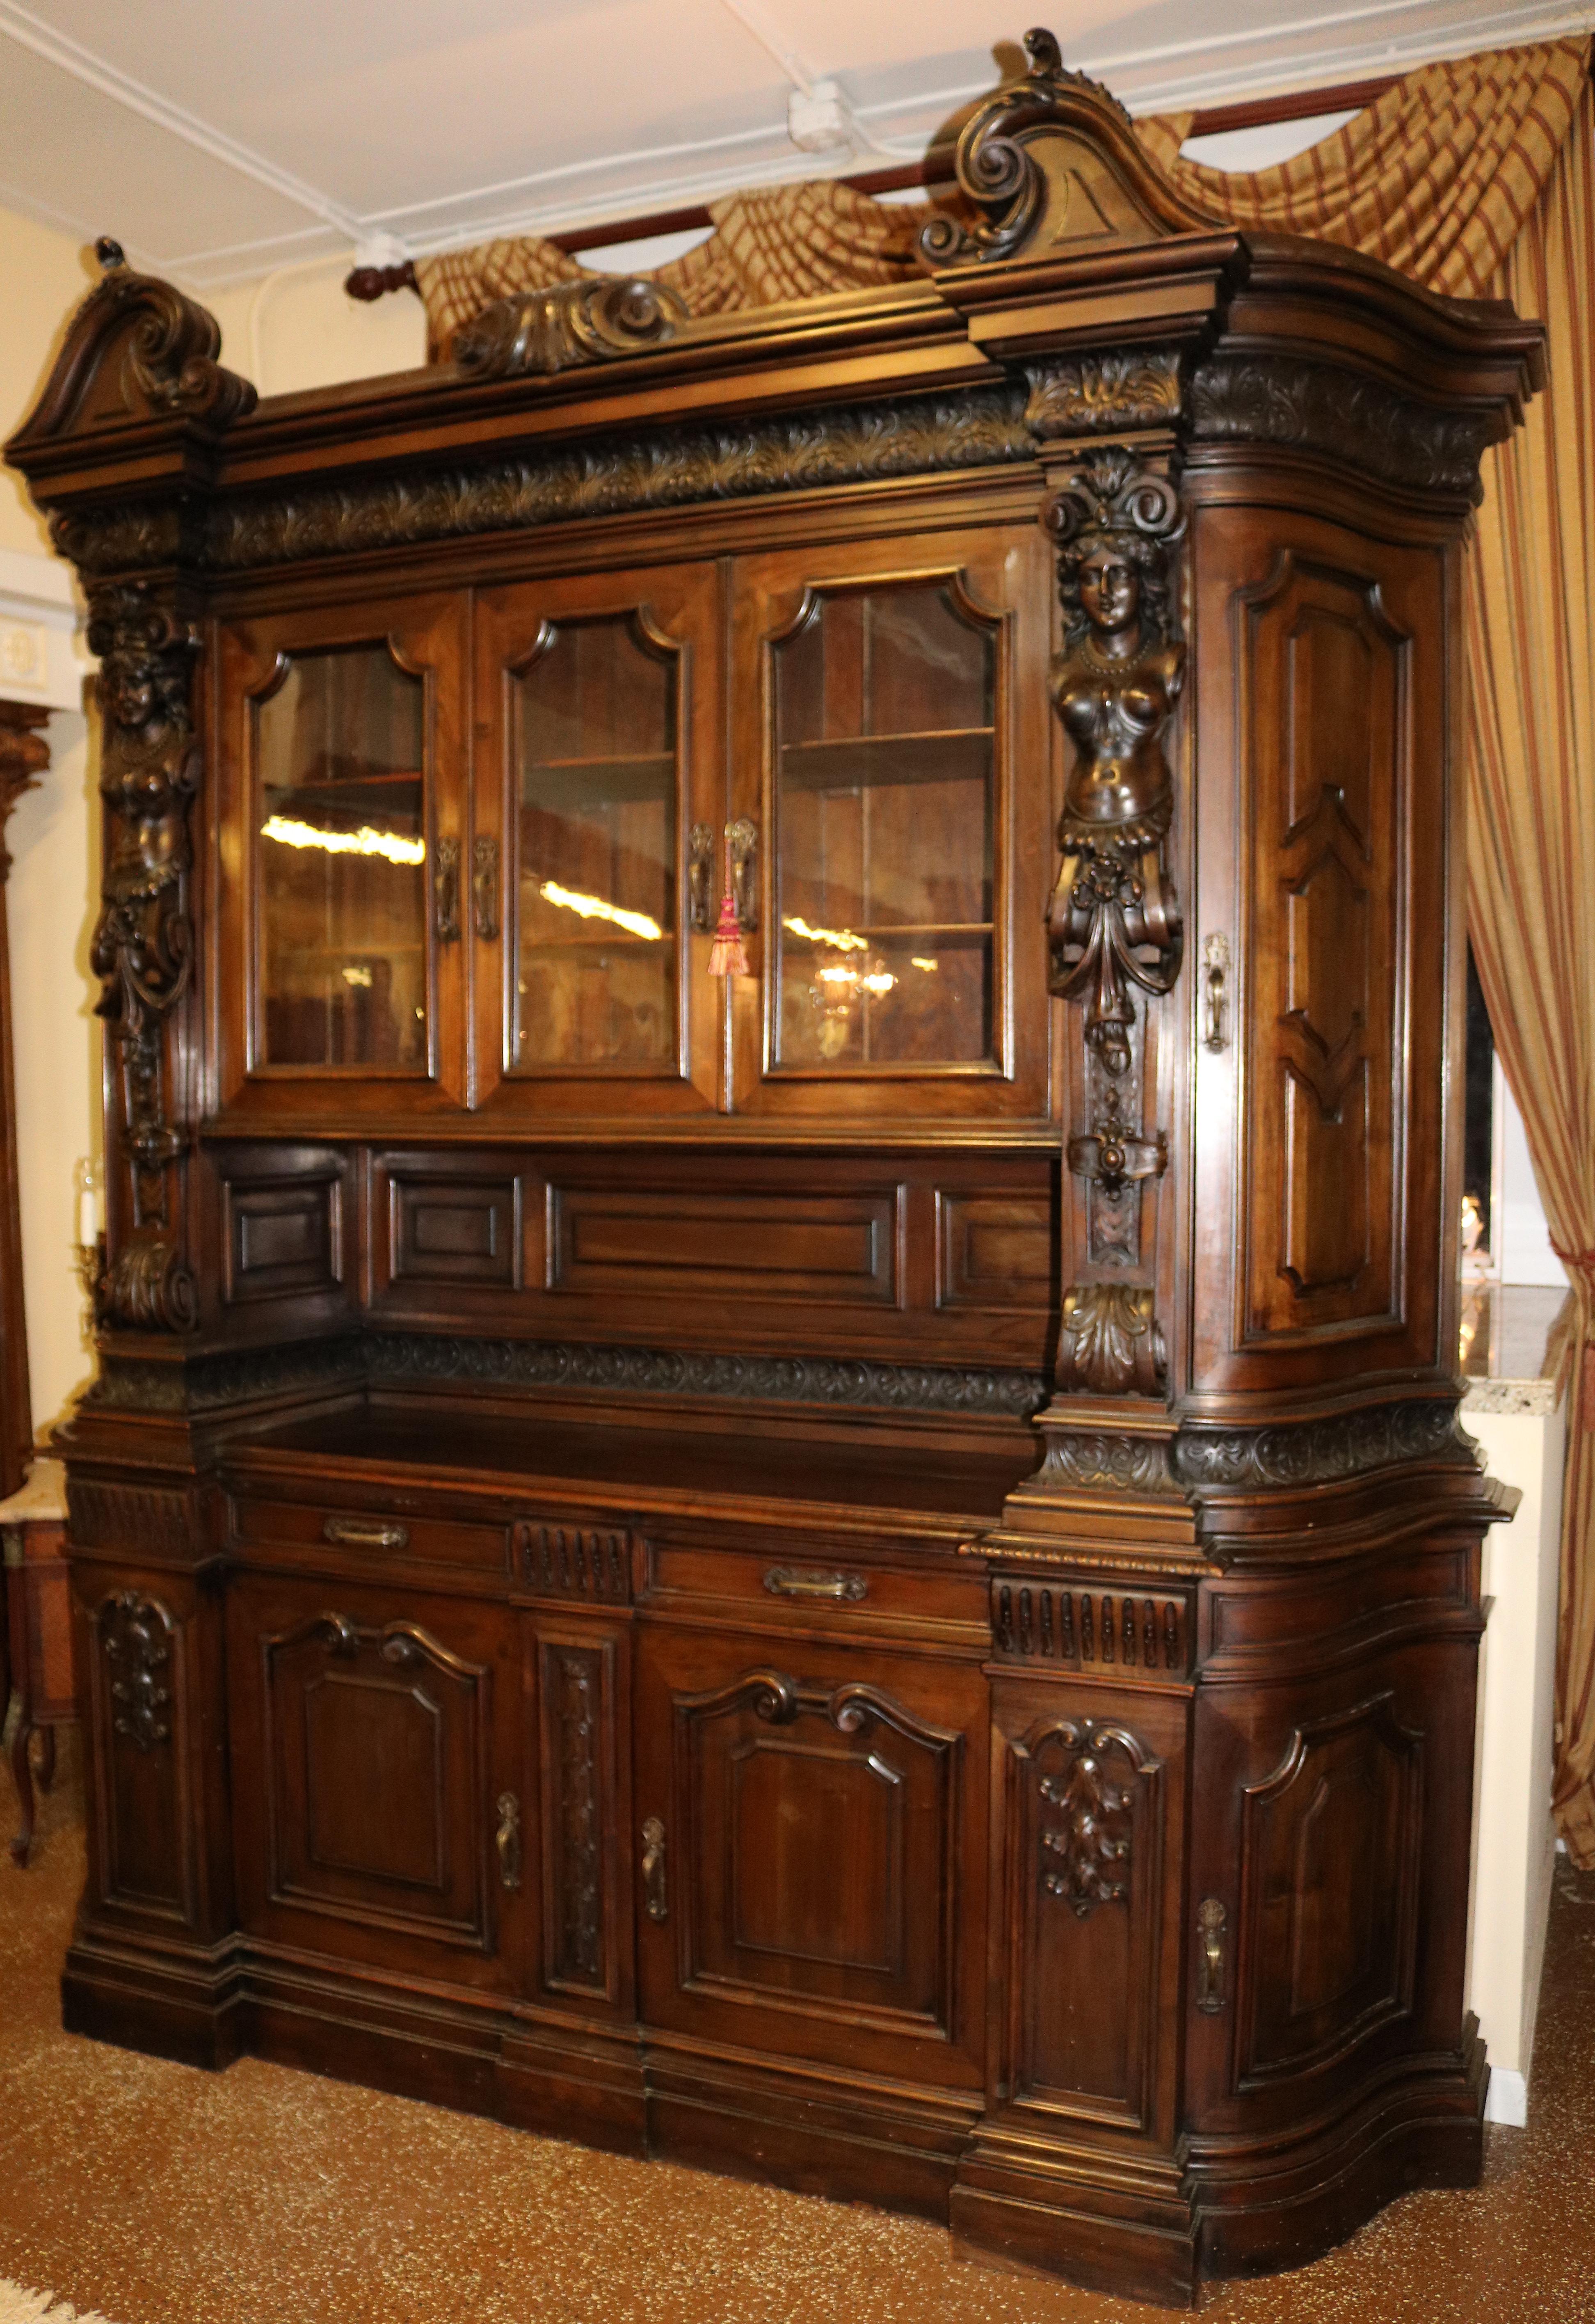 ​19th Century Italian Walnut Figural Renaissance Revival Buffet Sideboard Cabinet

Dimensions : 112